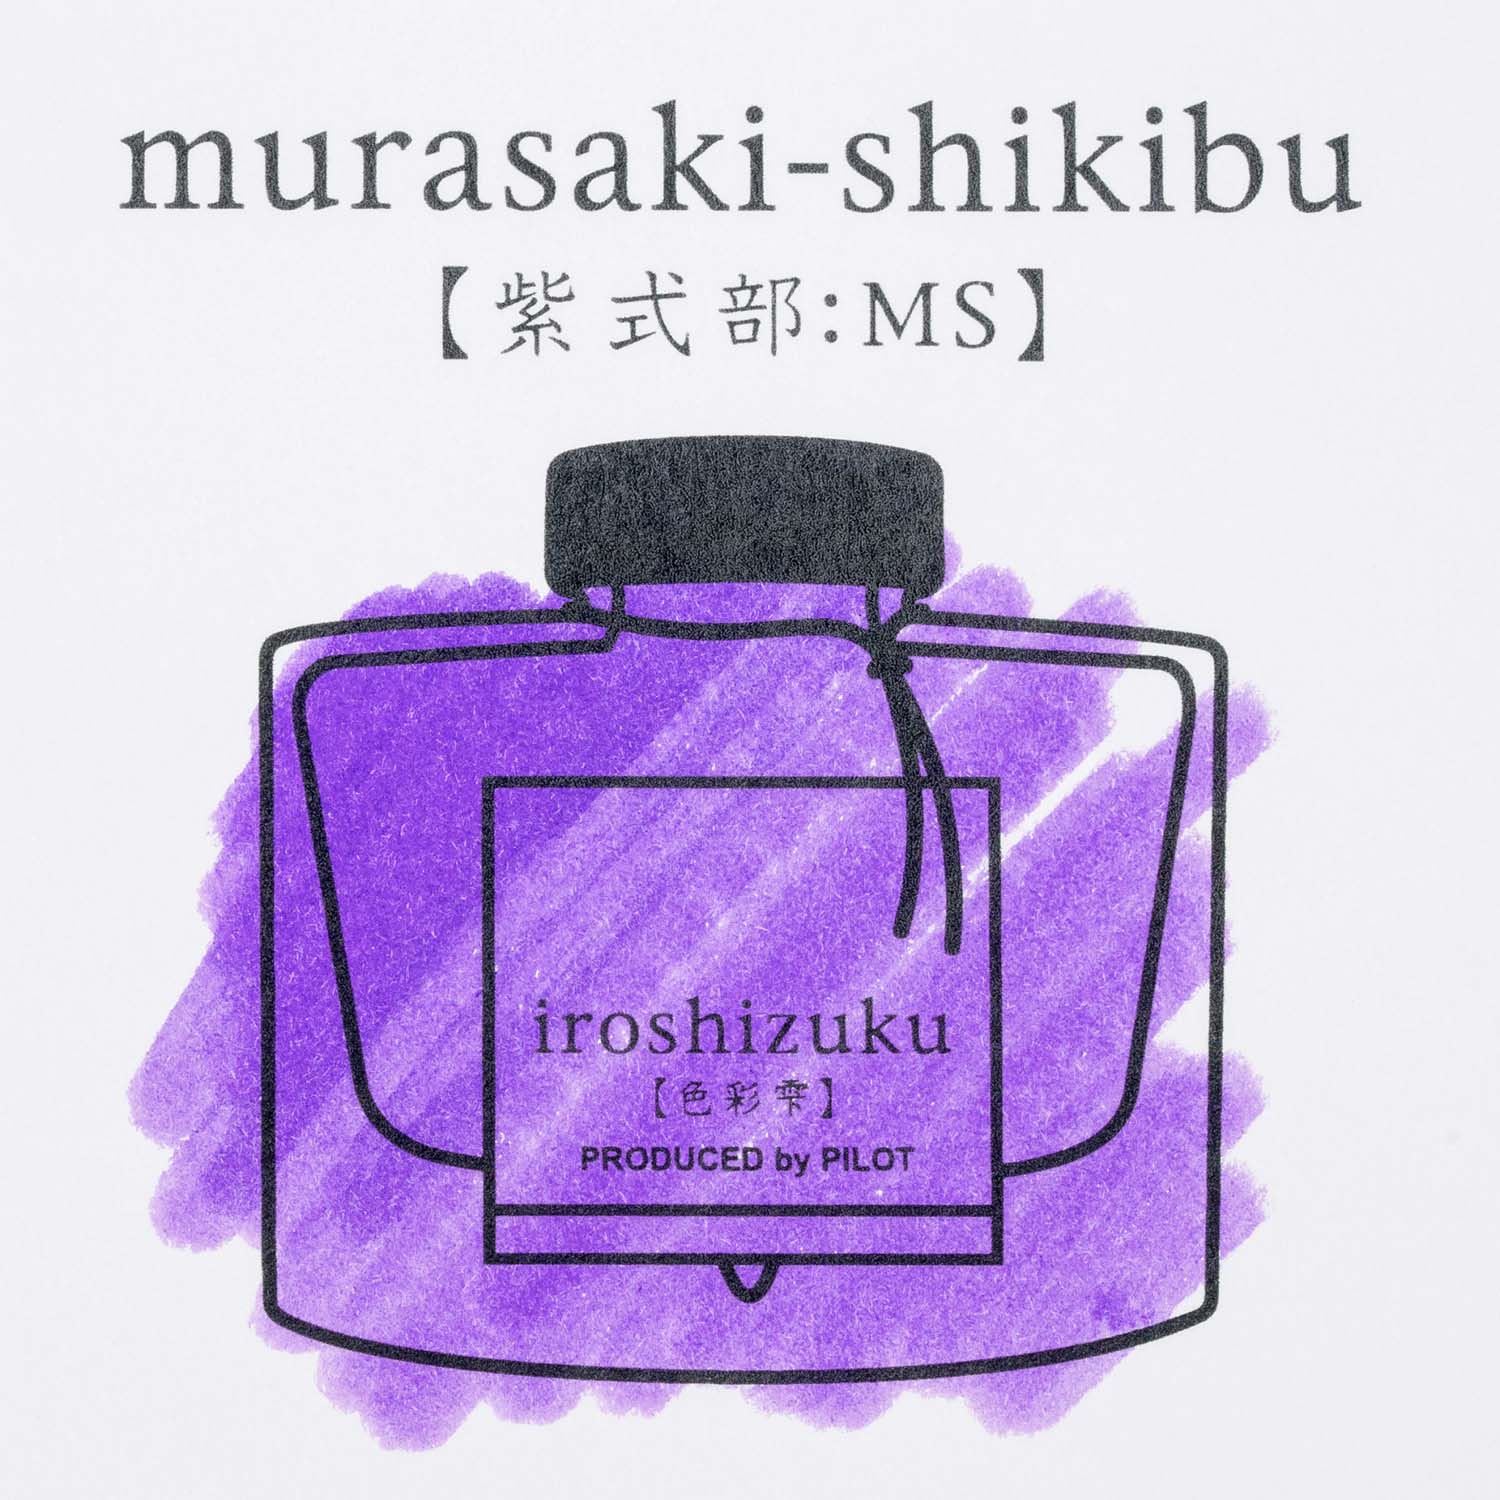 Pilot Iroshizuku Fountain Pen Ink - Murasaki-shikibu (Japanese Beautyberry) - sample purple